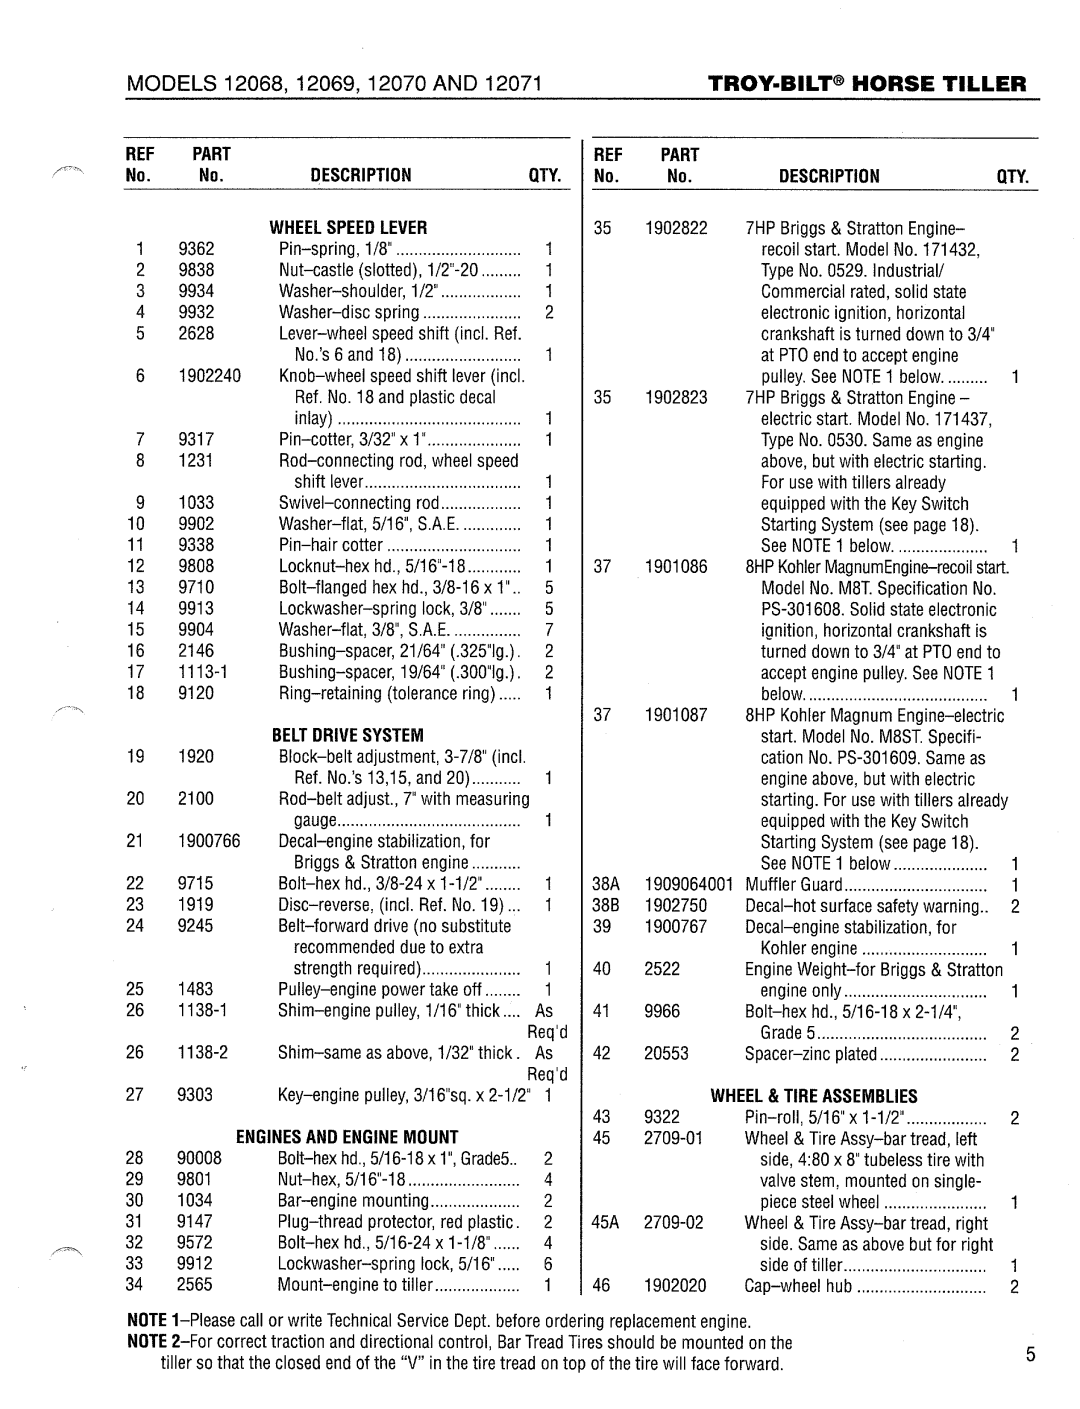 Troy-Bilt 12068-7HP manual 